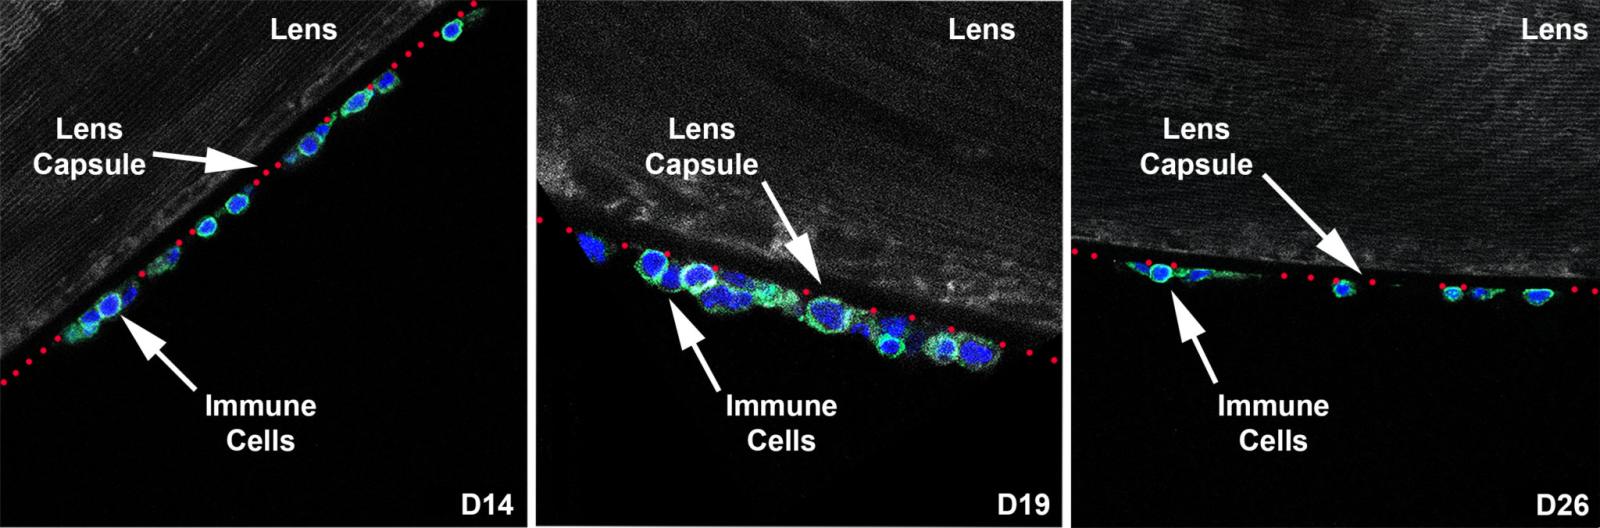 Immune cells lining the lens capsule